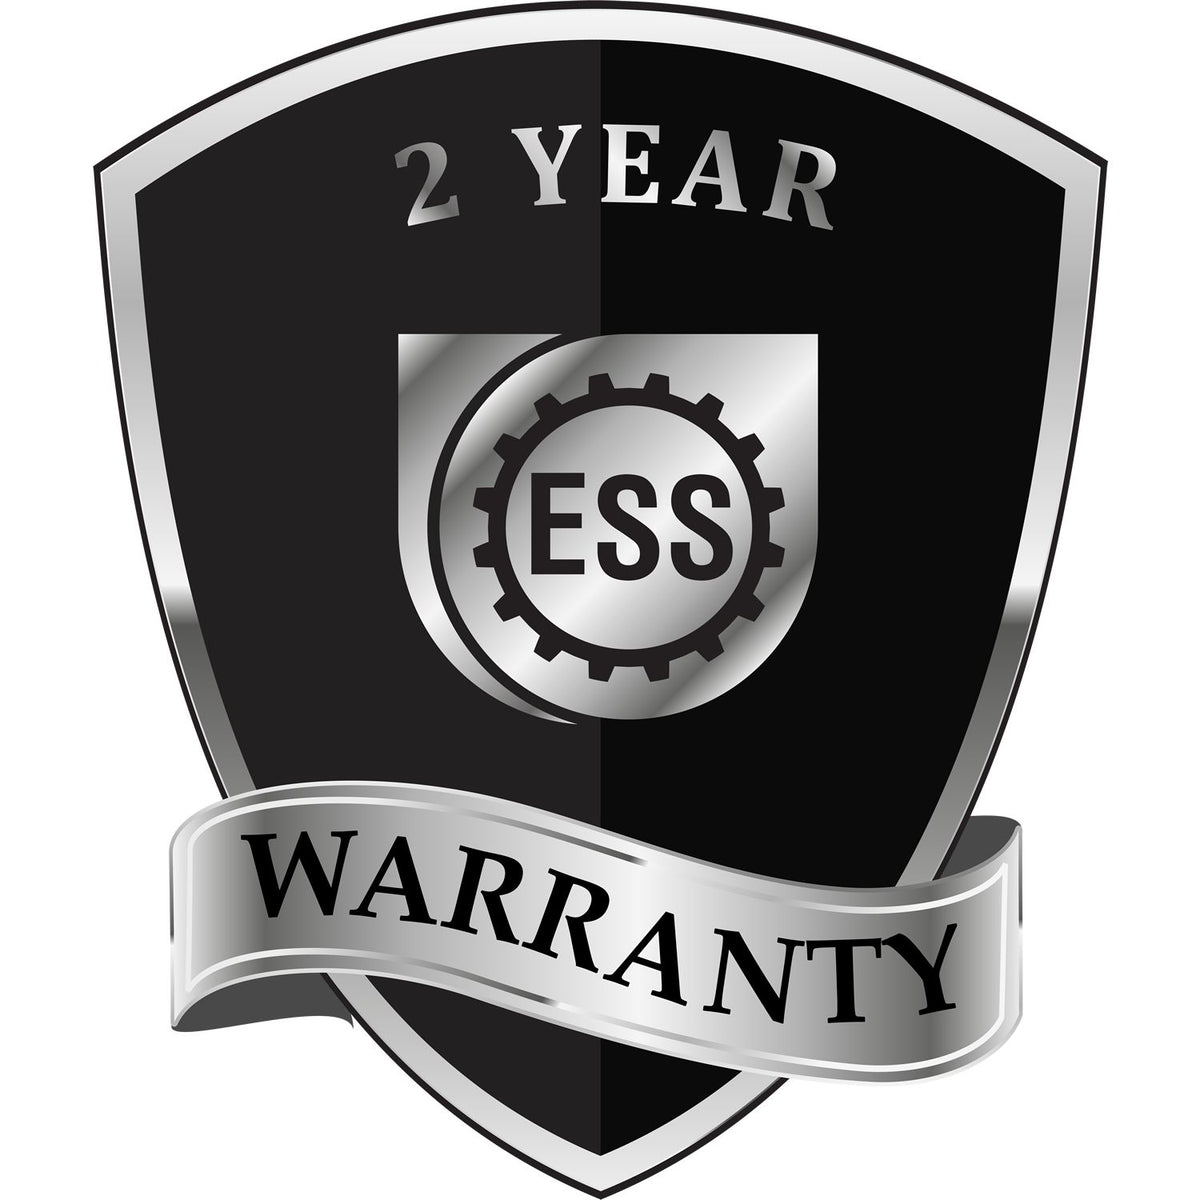 A black and silver badge or emblem showing warranty information for the Hybrid Maryland Land Surveyor Seal